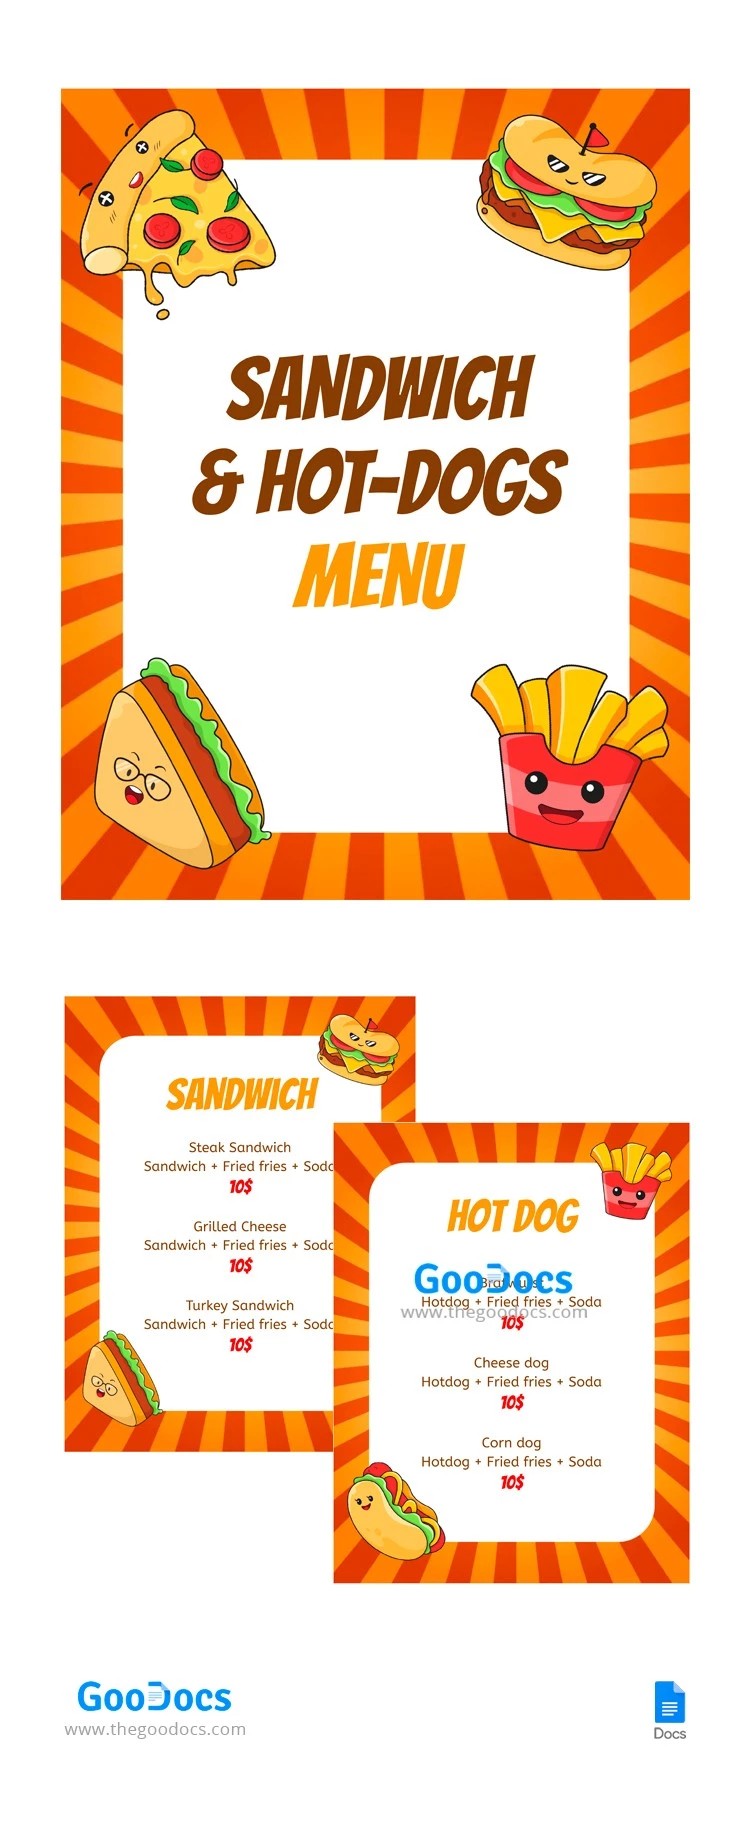 Sandwich and Hot-Dog Menu - free Google Docs Template - 10064599